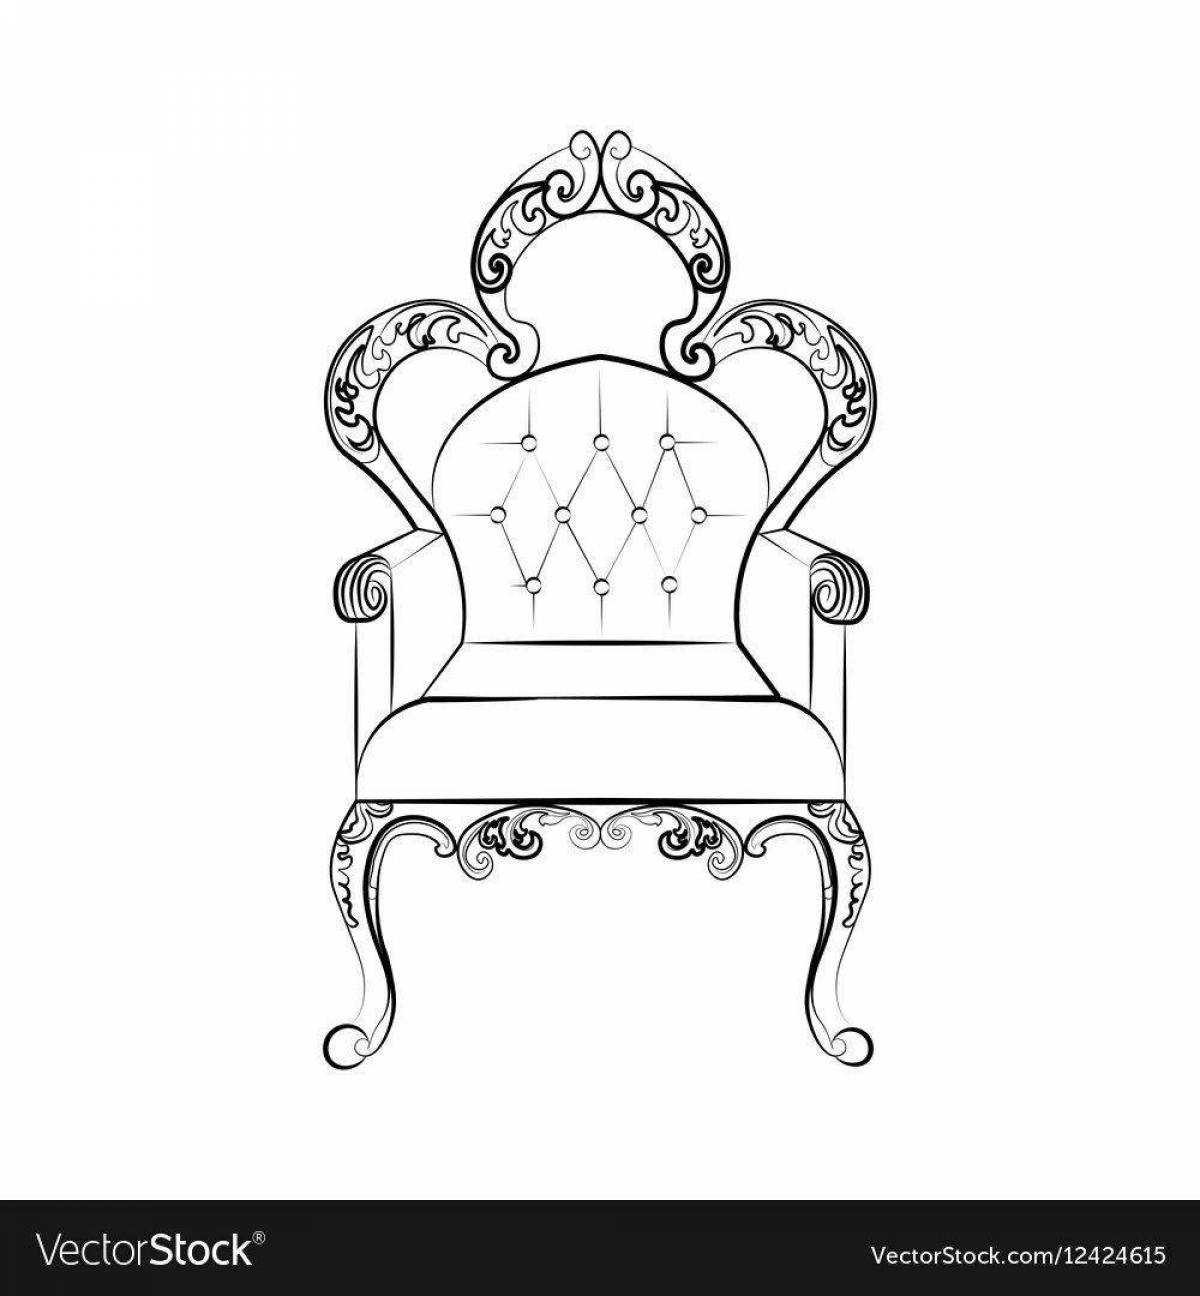 Generous throne coloring